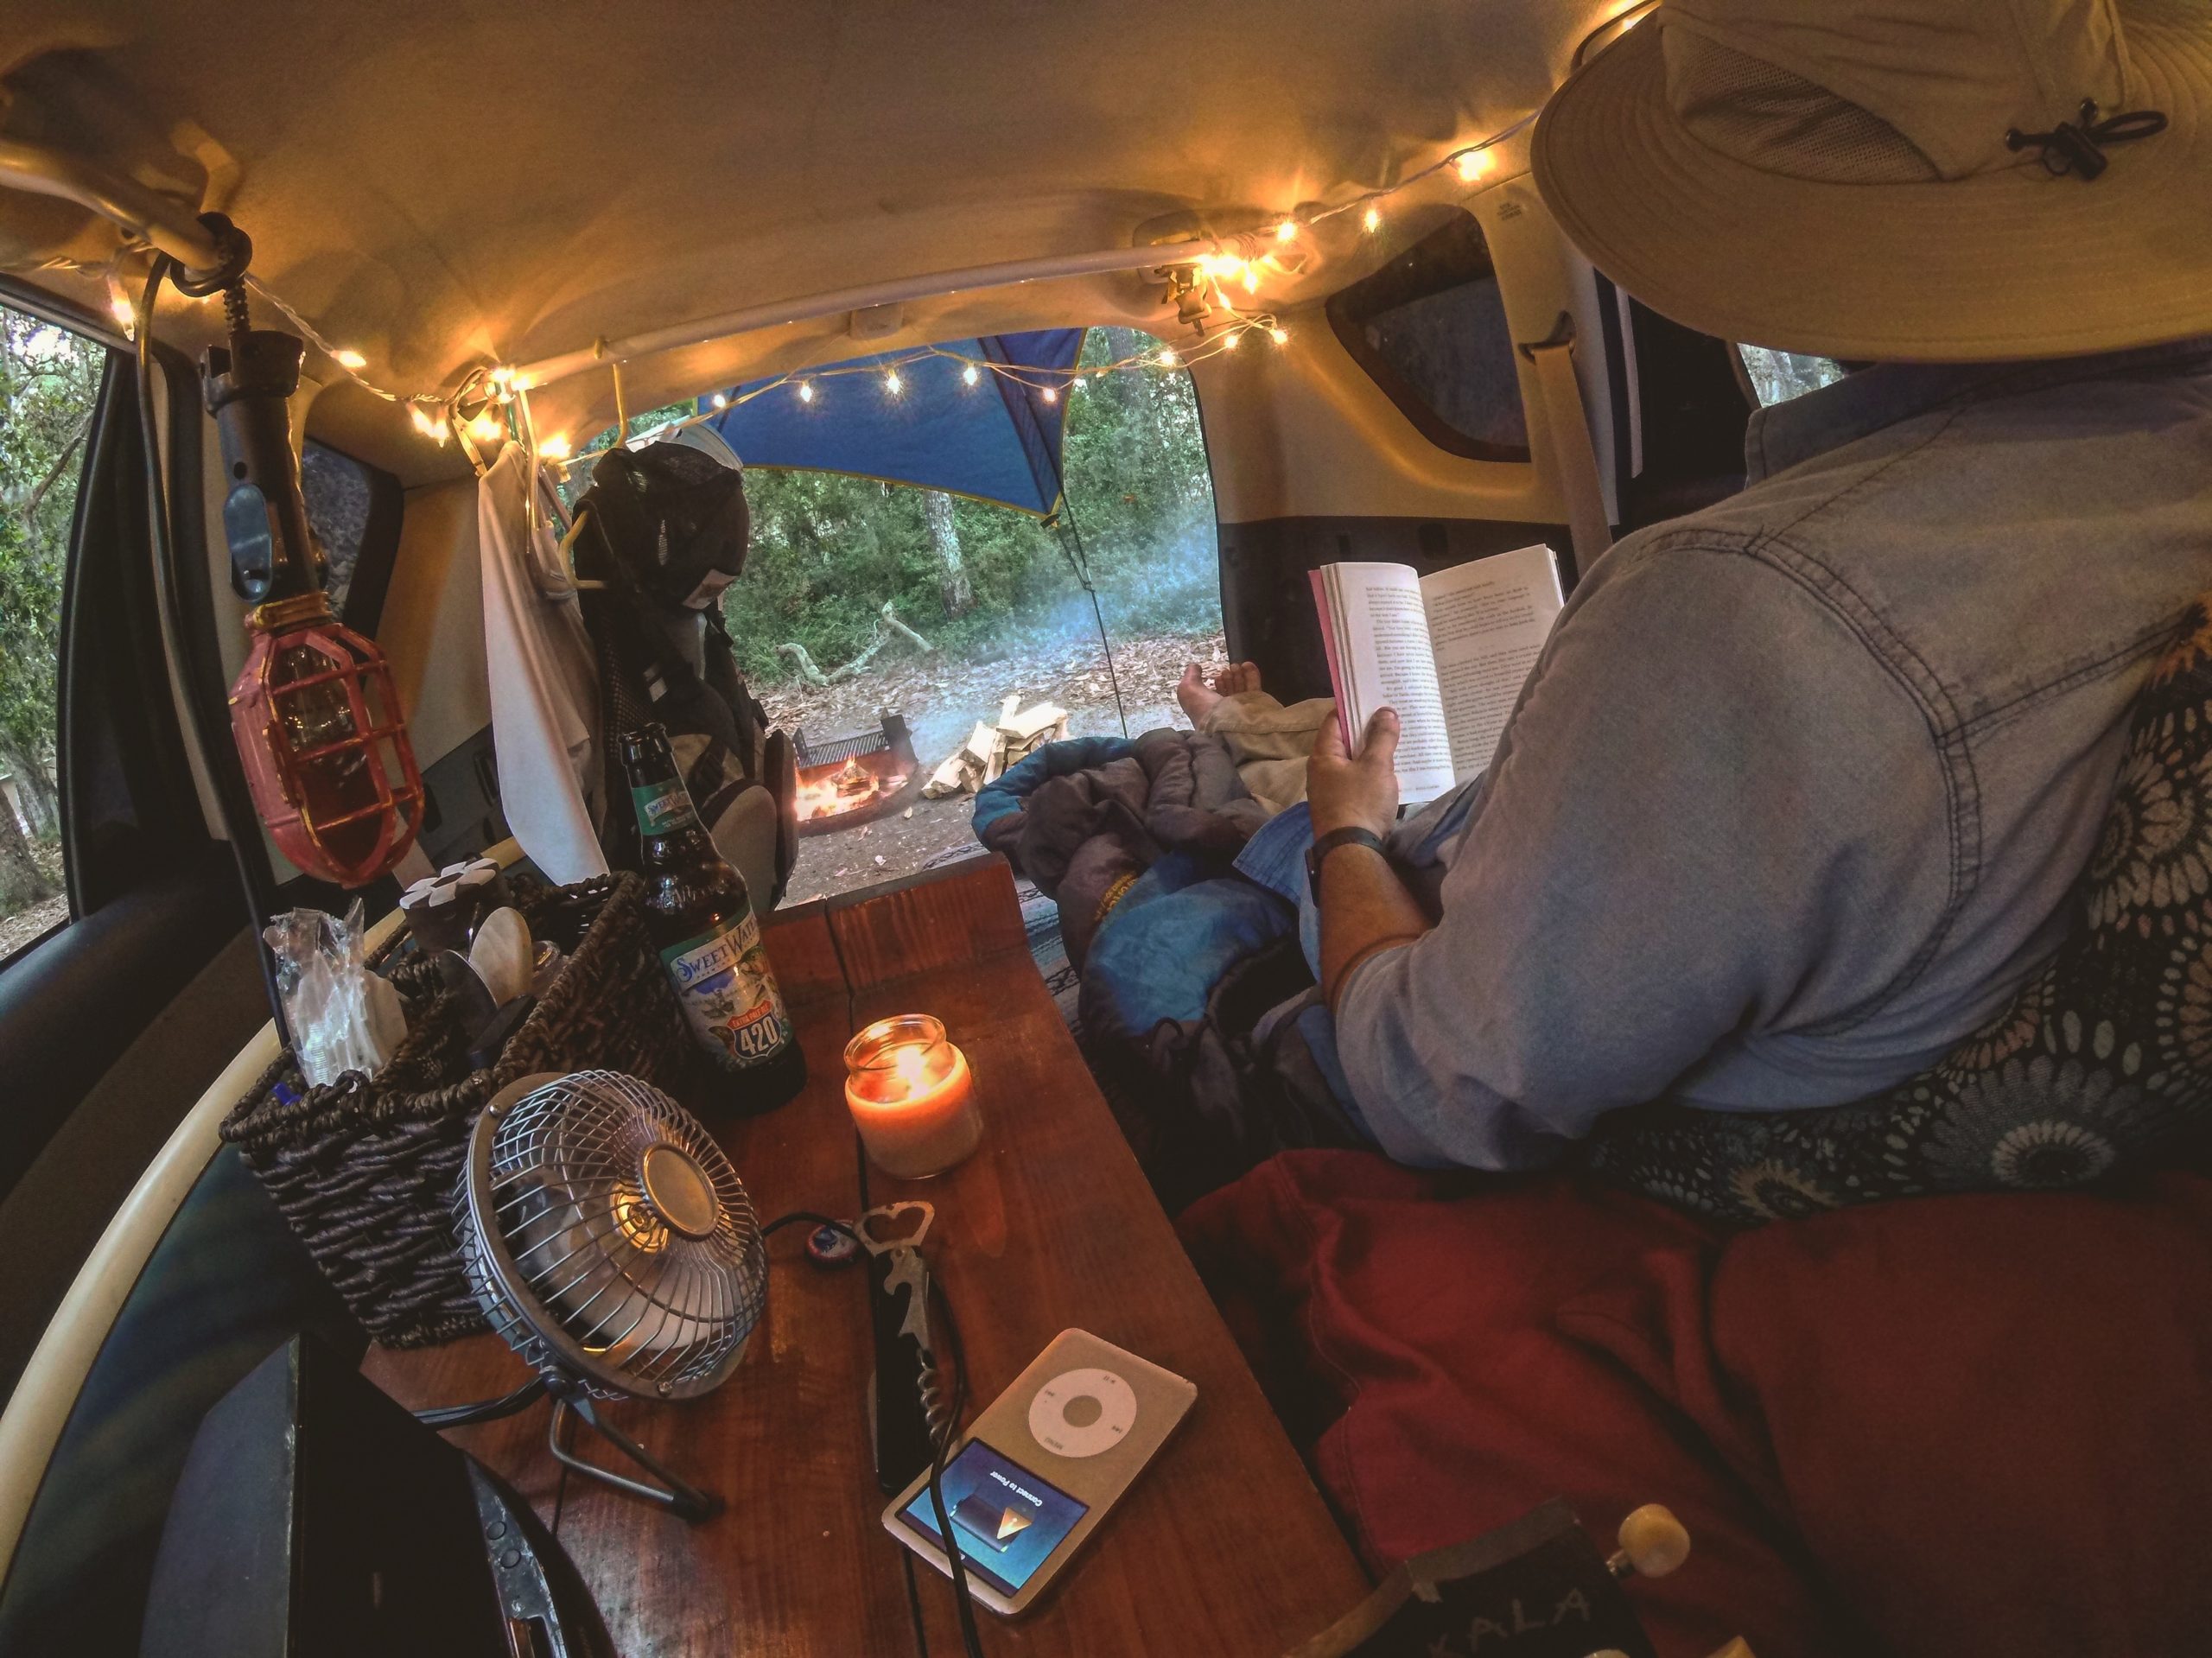 RAV4 Car Camping Guide (How to Sleep Comfortably)